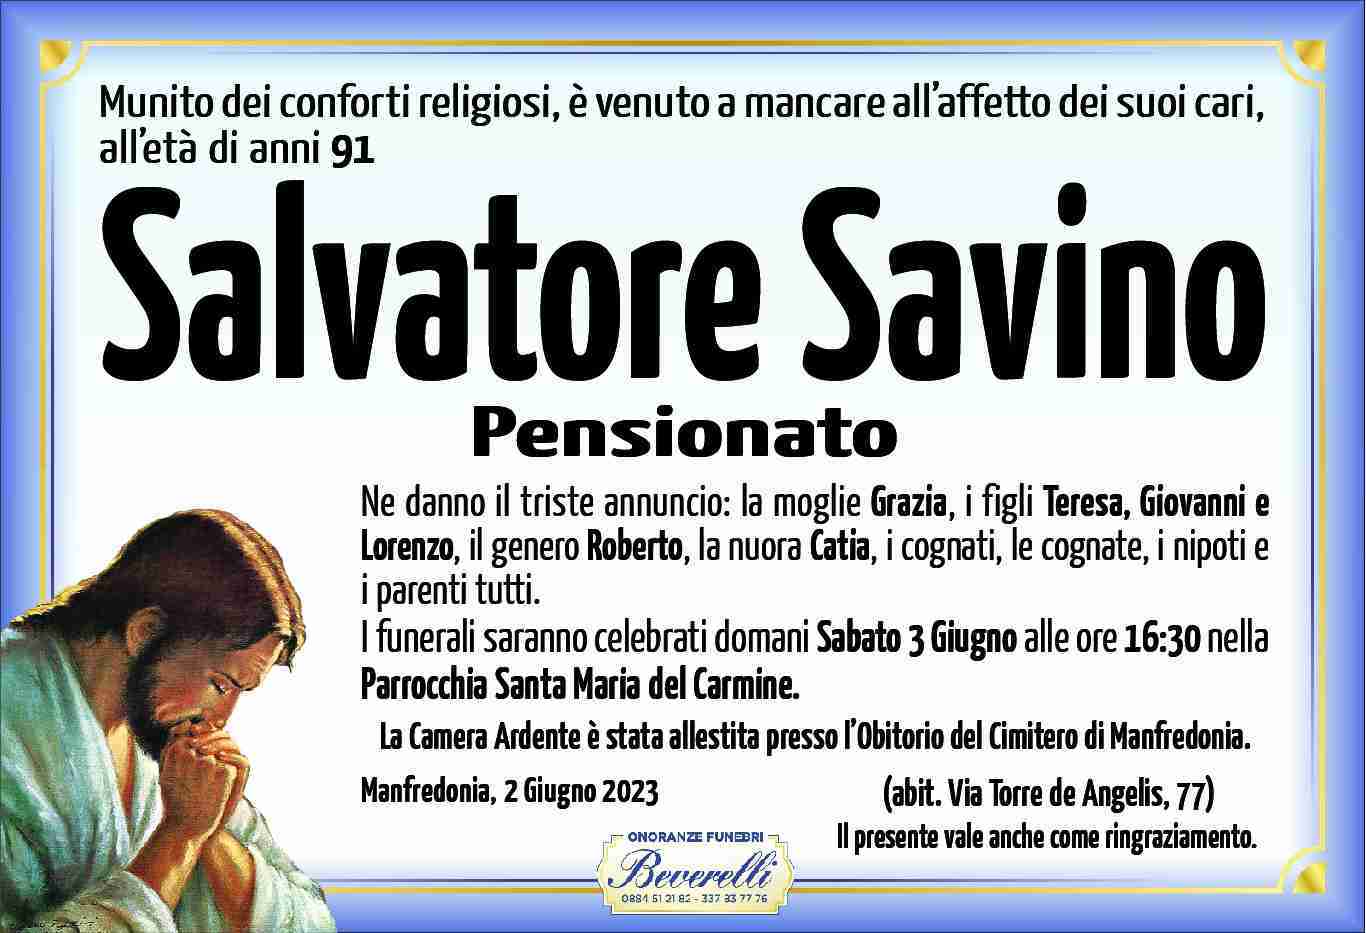 Salvatore Savino